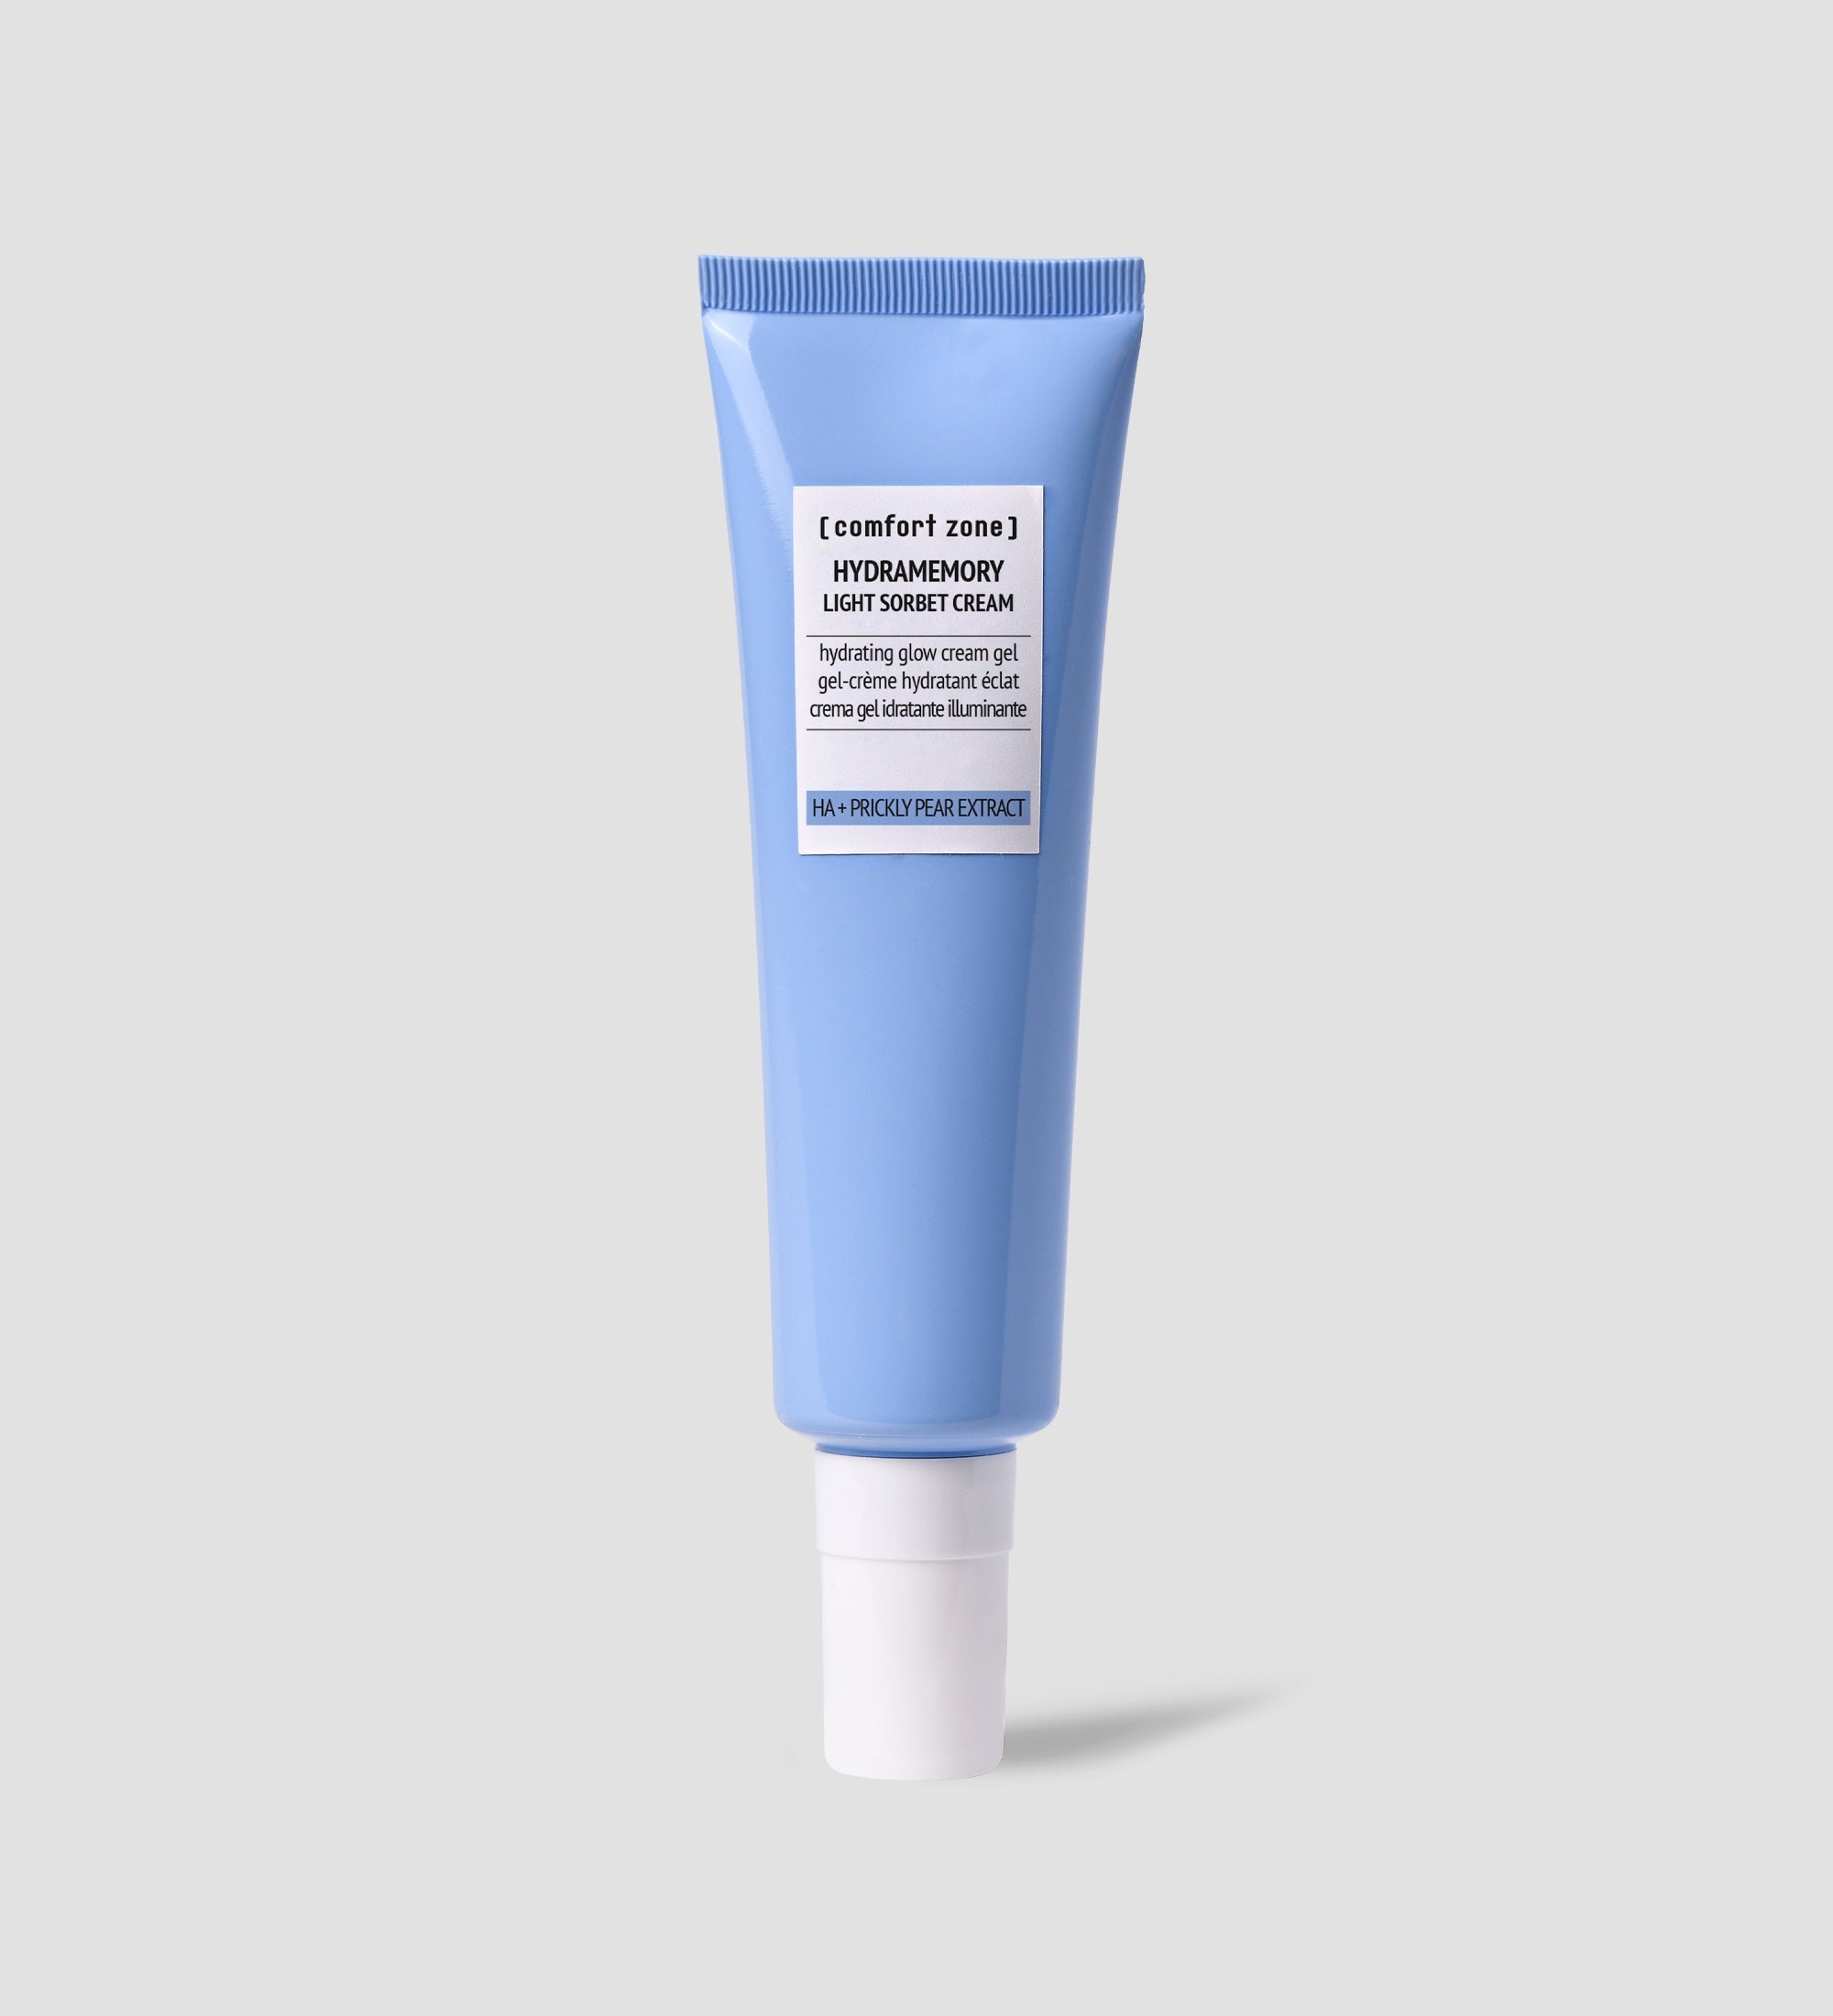 Hydramemory Light Sorbet Cream (Retail)